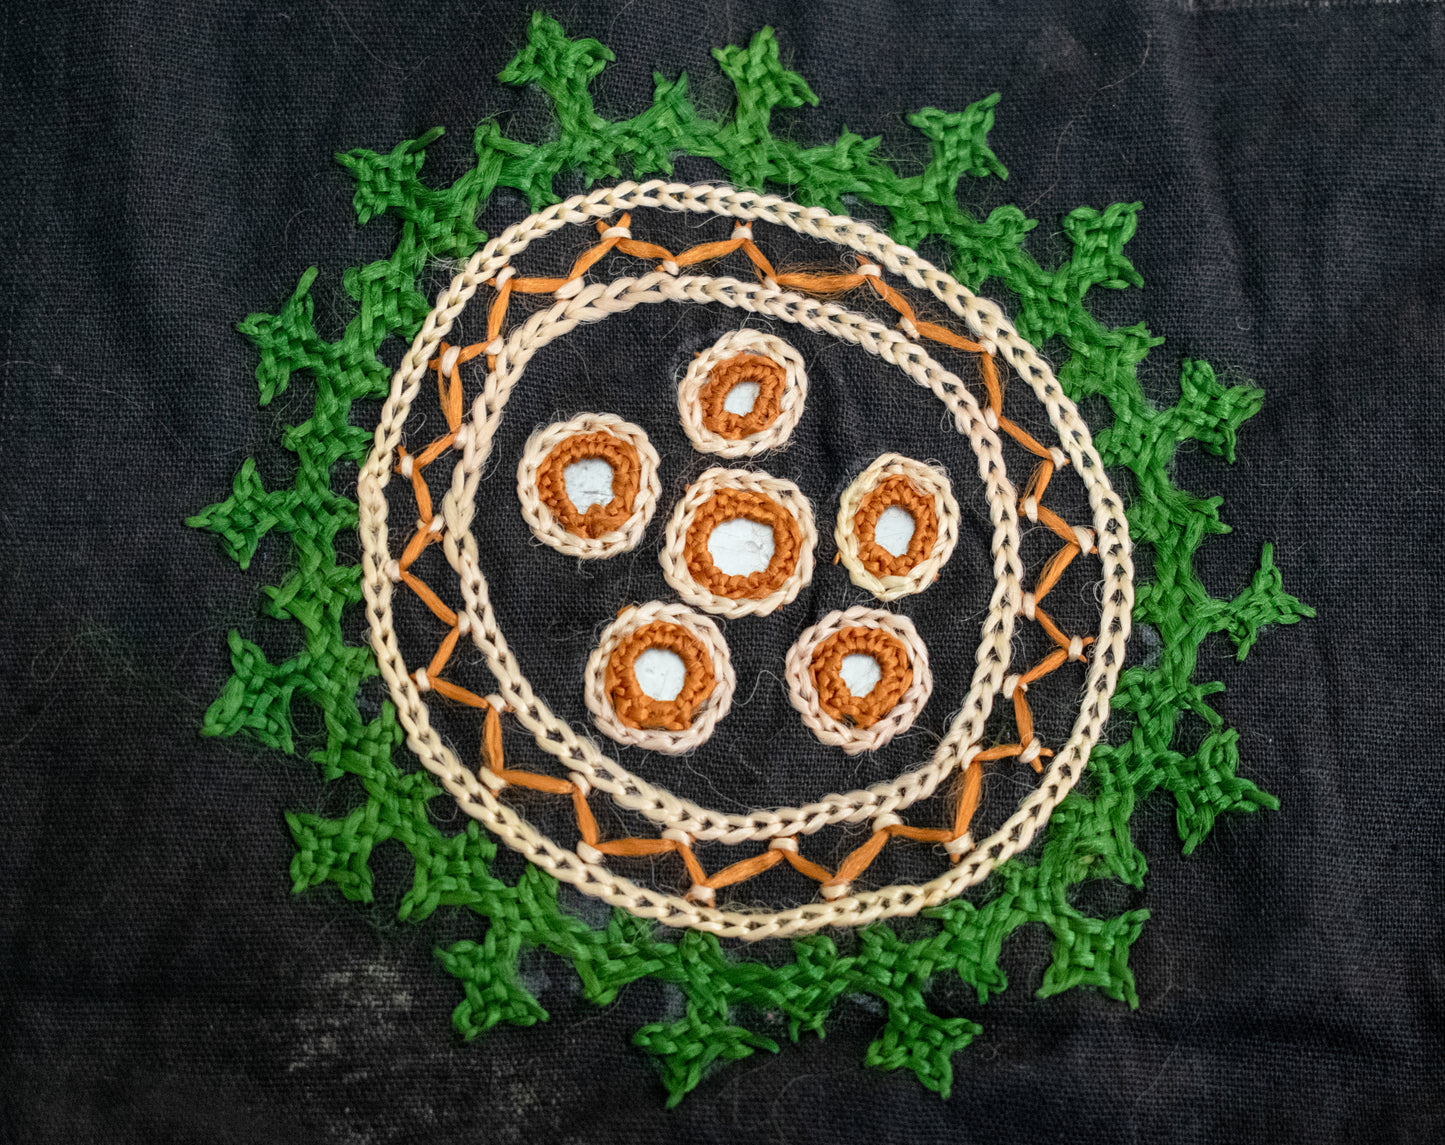 Bavalia Work Hand Embroidery